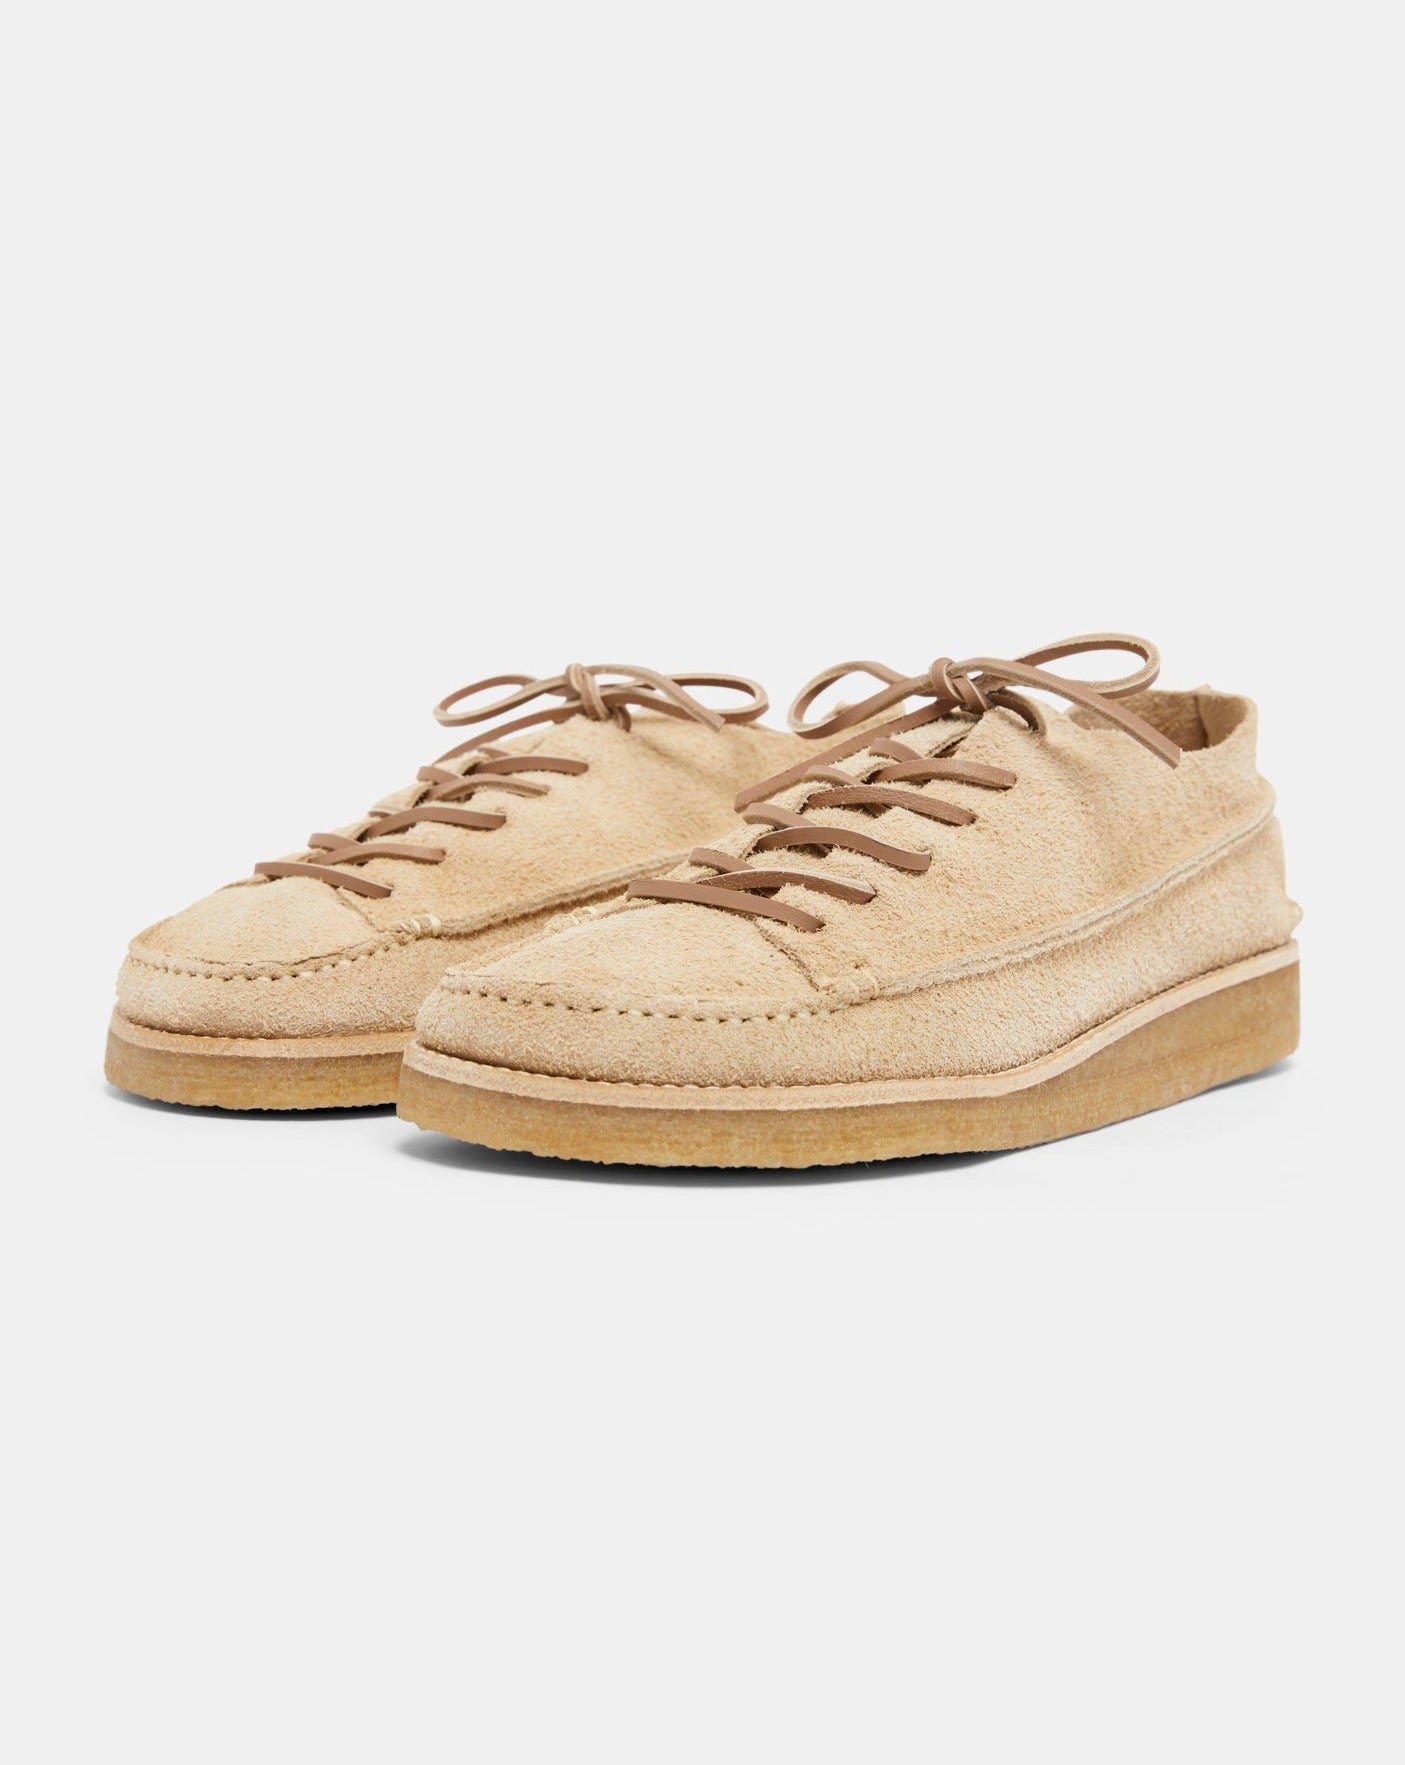 Yogi Finn Suede Hairy Senape Sand Shoes Leather Men